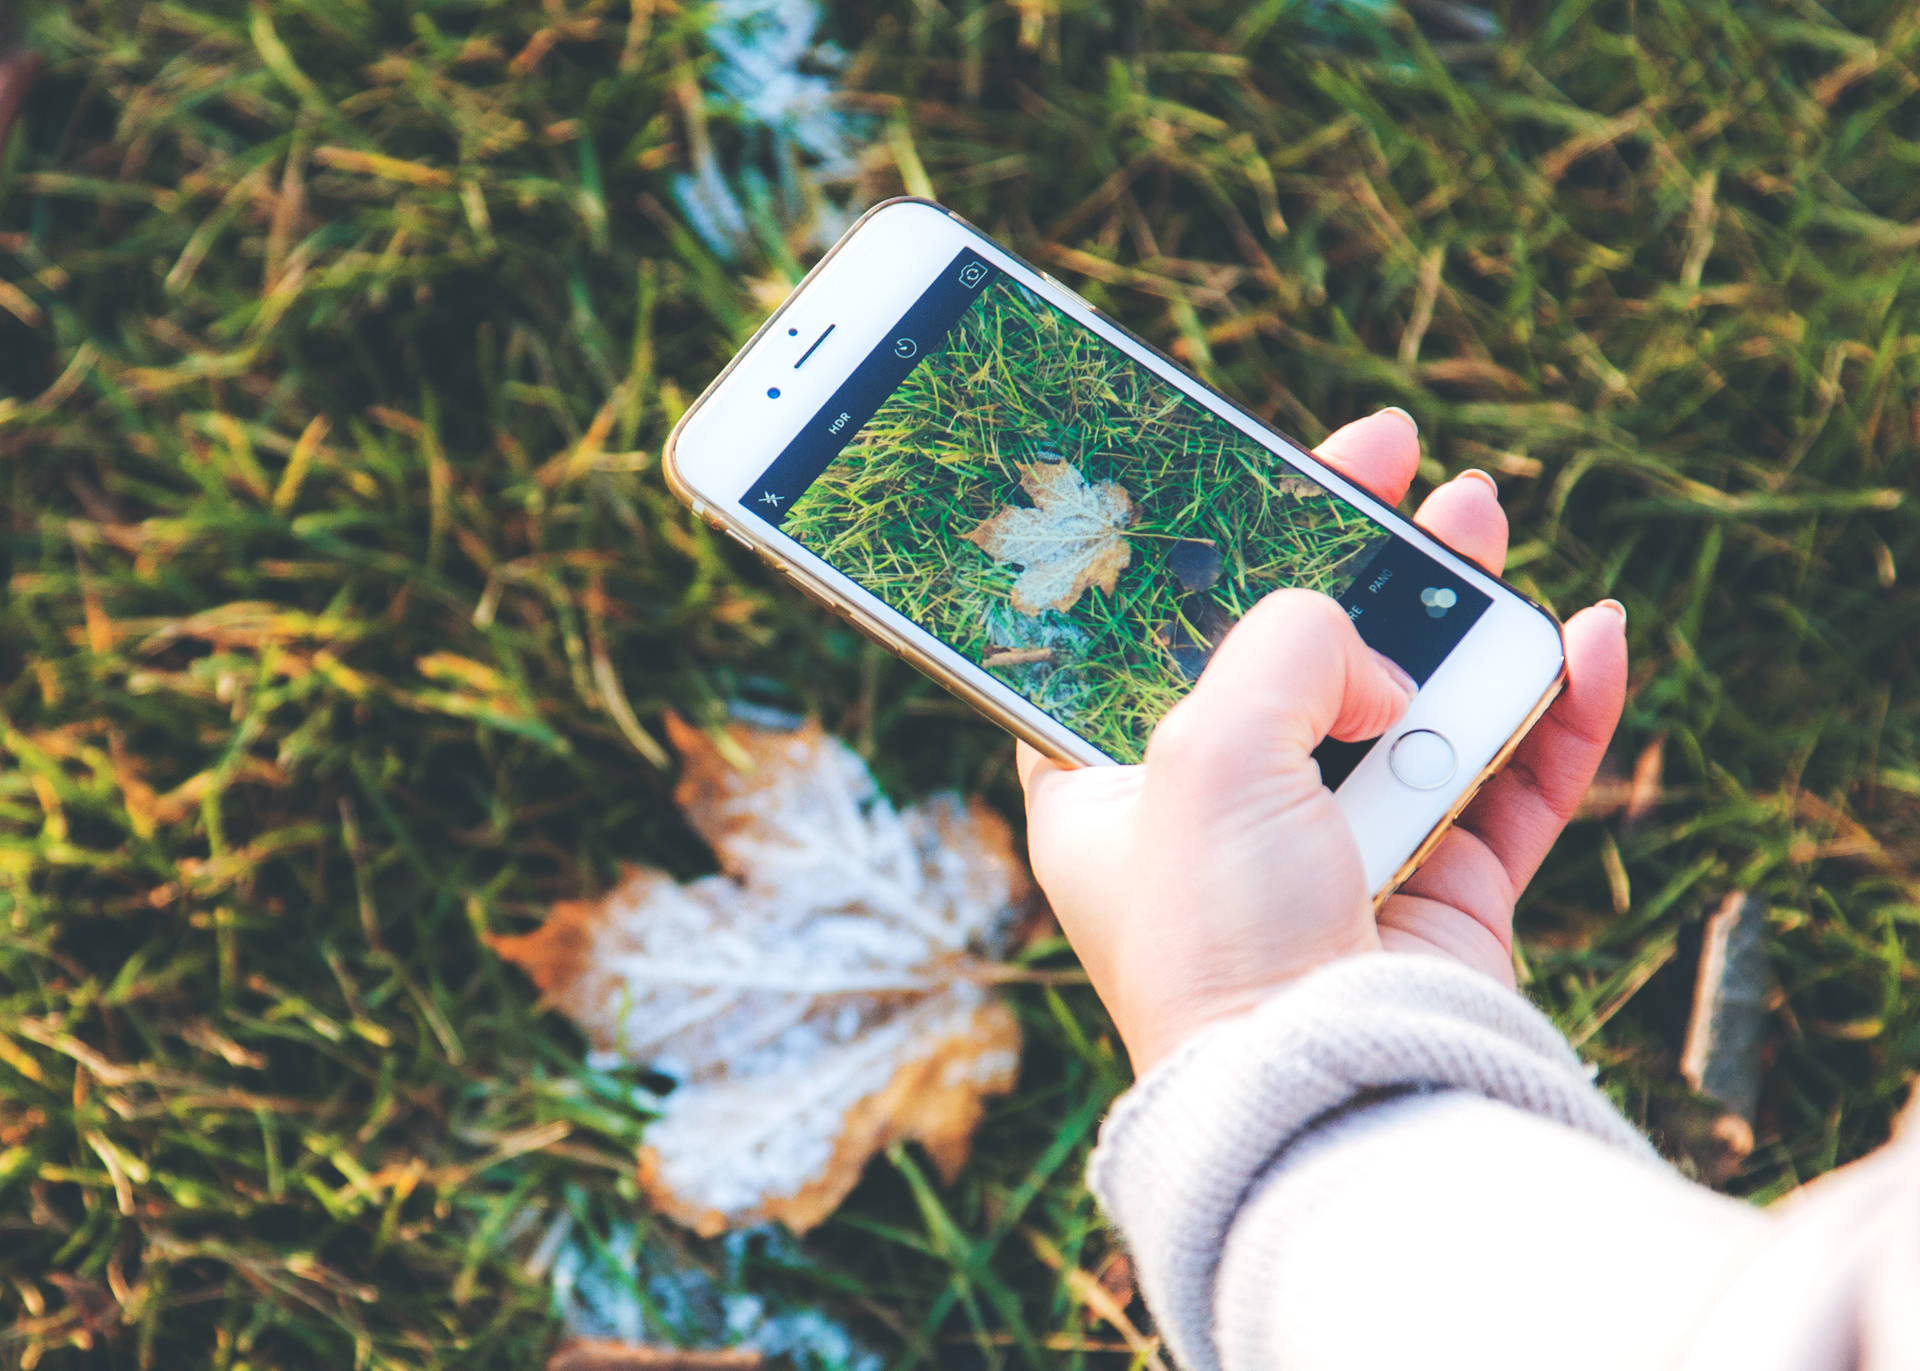 Caption: Captivating Autumn Landscape With Phone